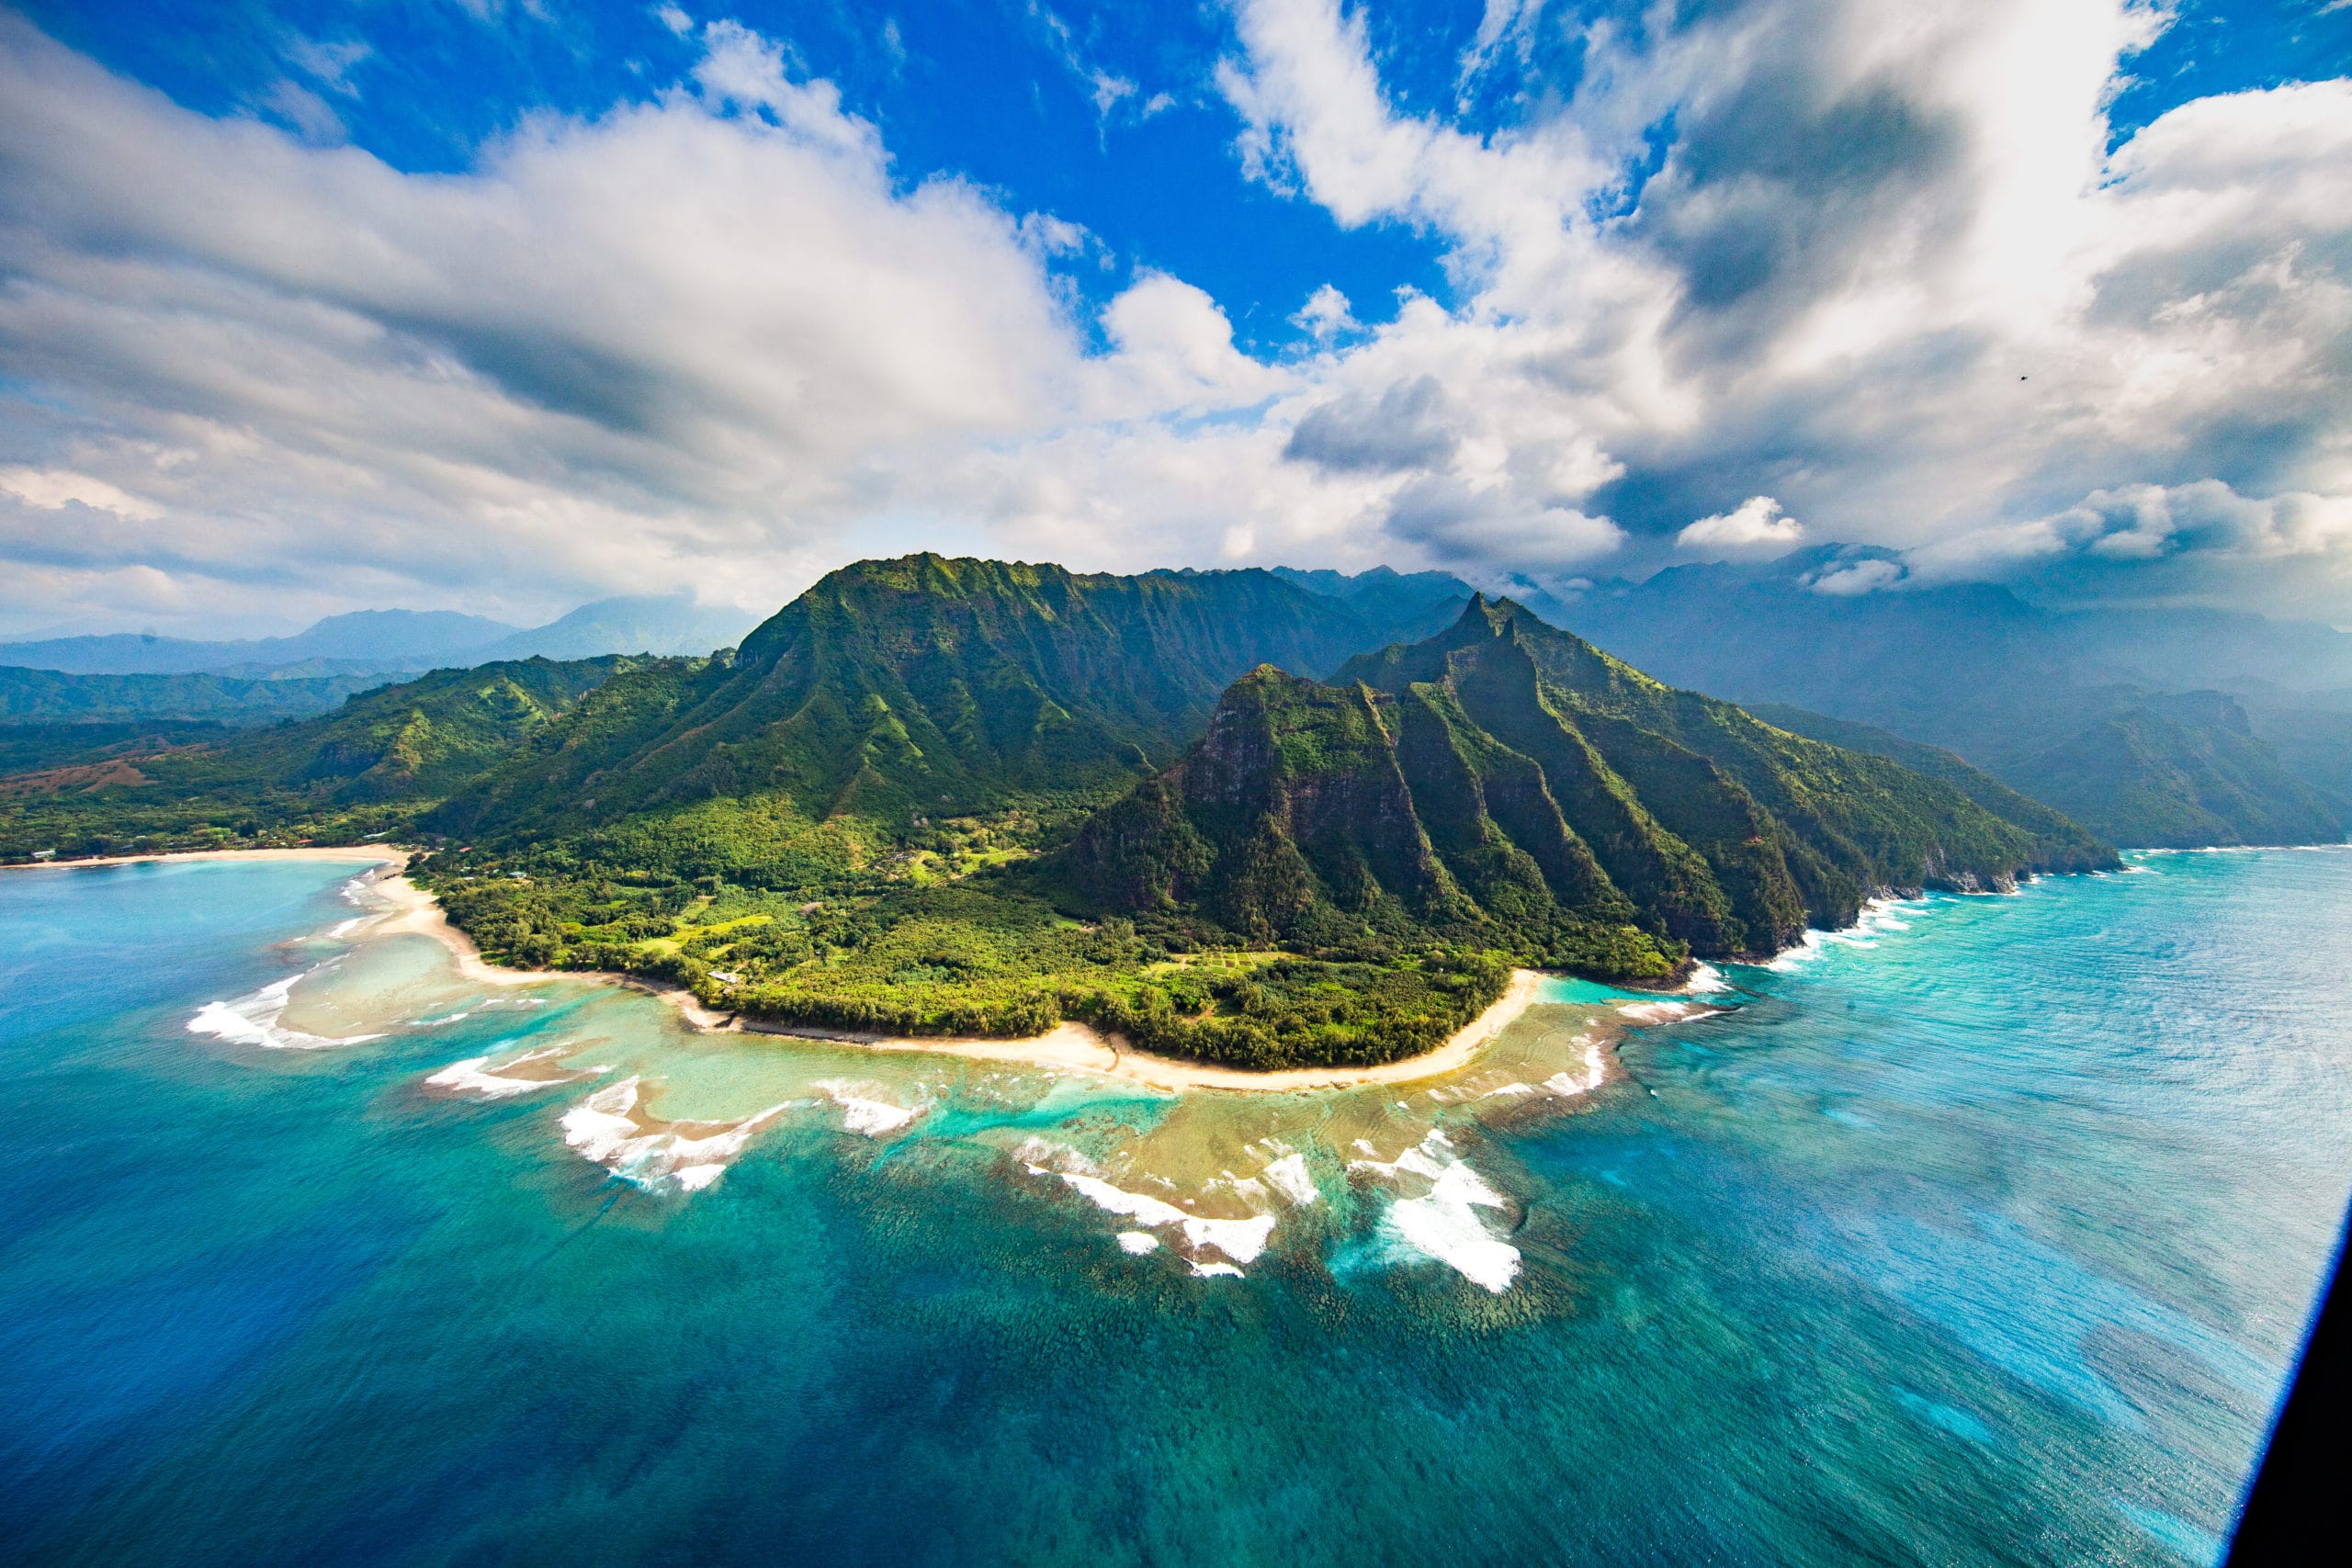 Aerial shot of the beach, ocean, and mountains in Kauai, Hawaii